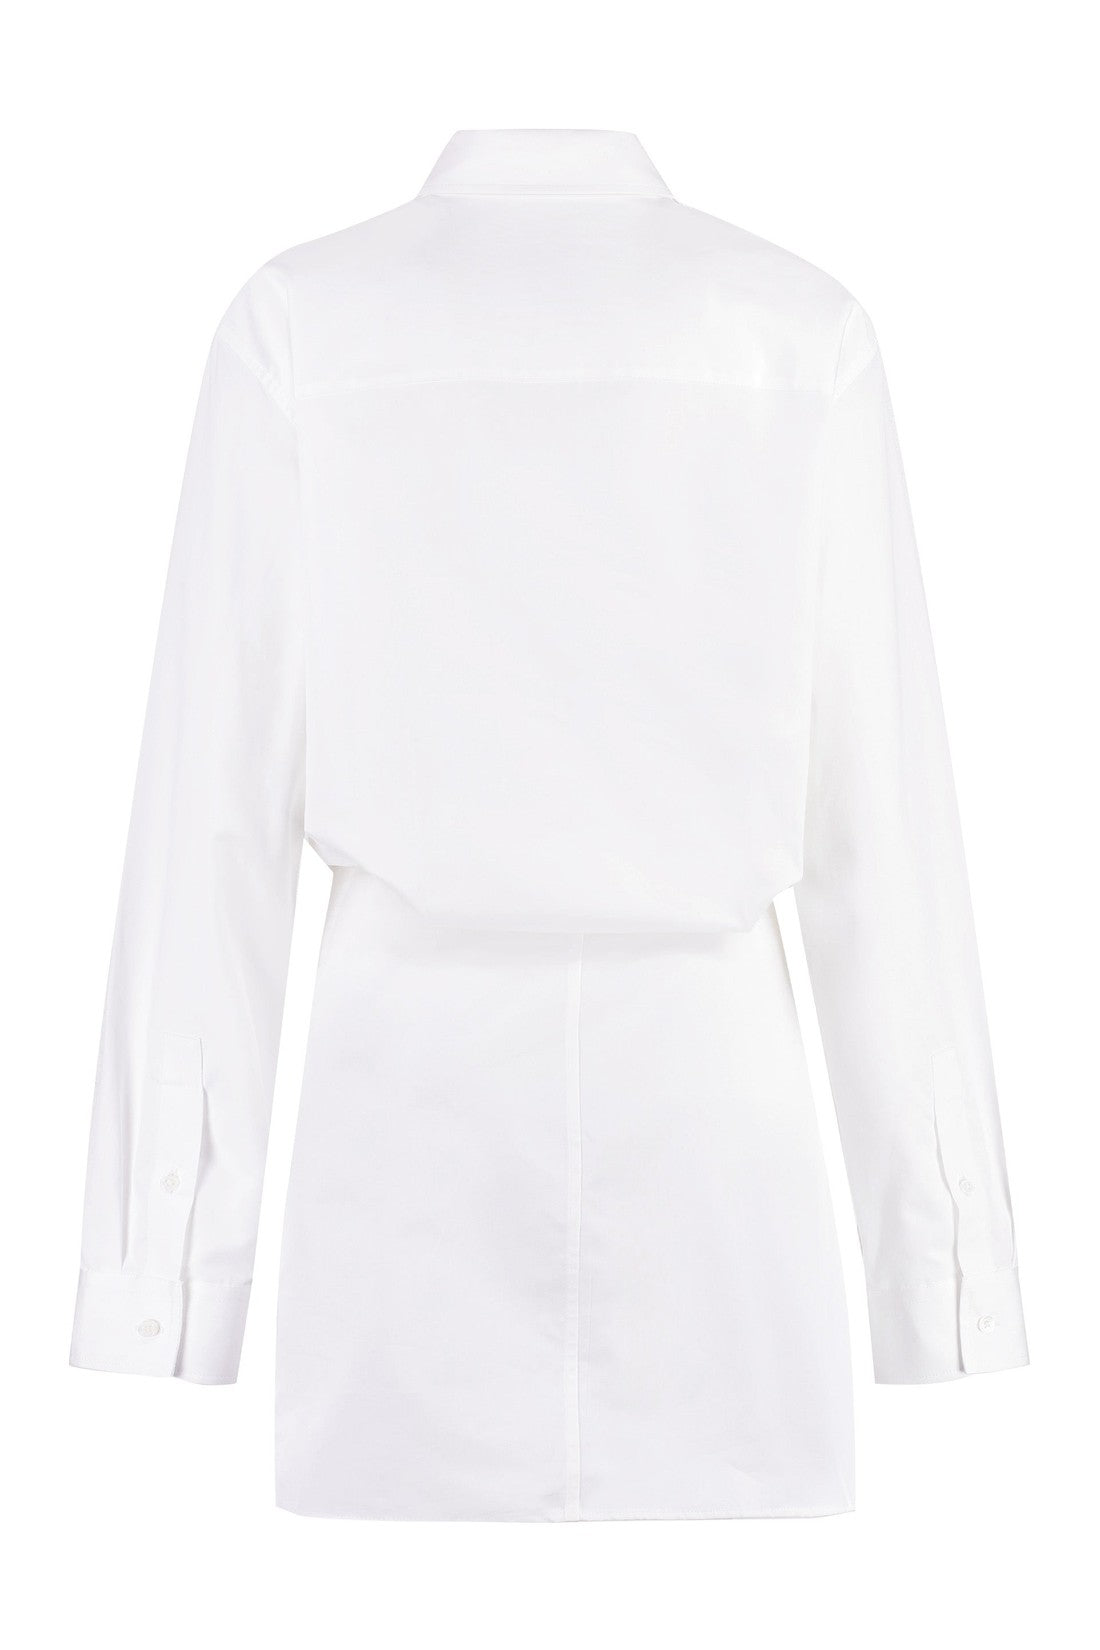 Off-White-OUTLET-SALE-Cotton shirtdress-ARCHIVIST